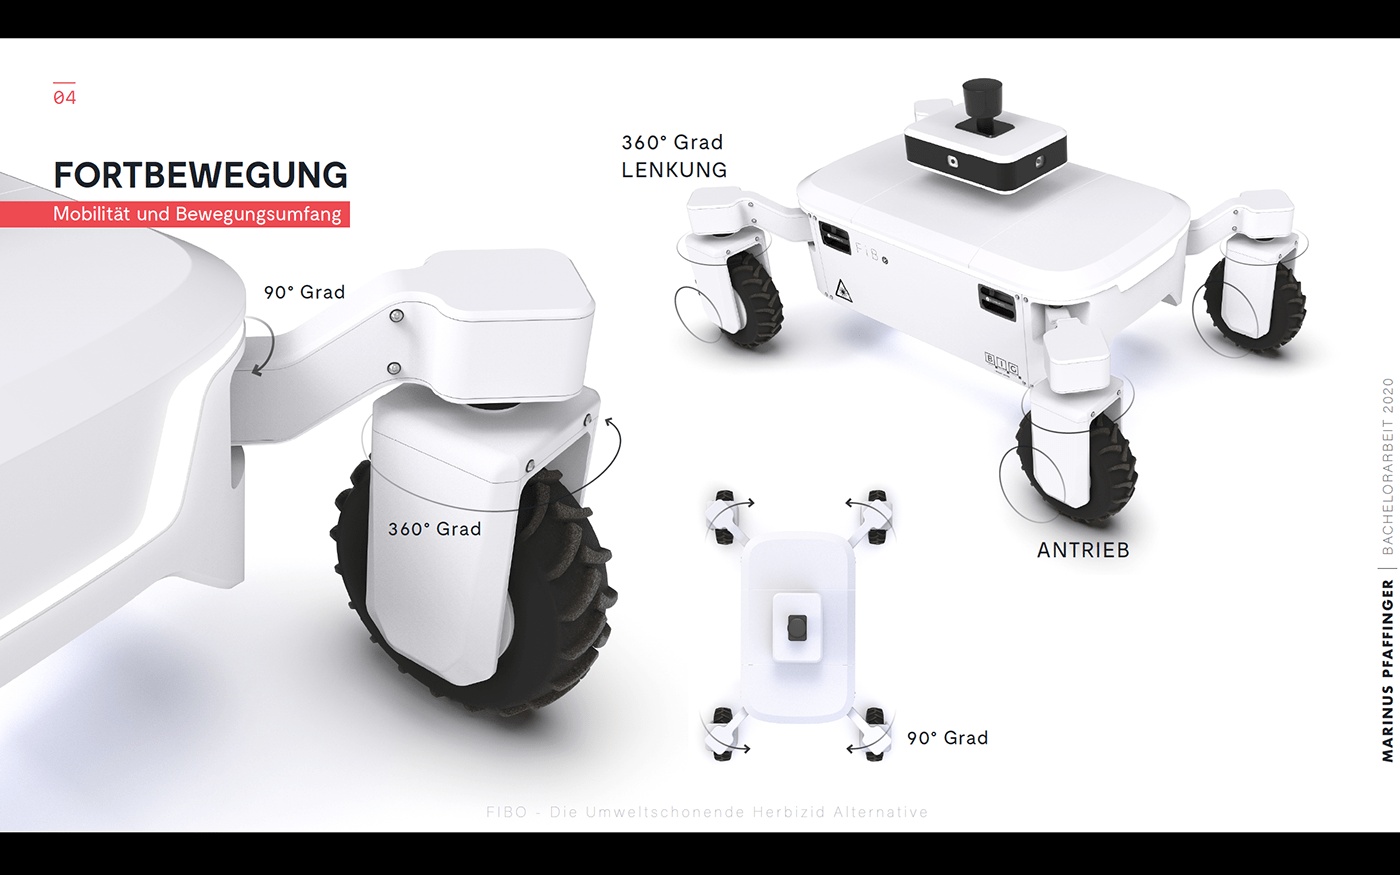 agrar autonom Autonomous Fibo  landwirtschaft laser robot roboter Unkrautbekämpfung weed control